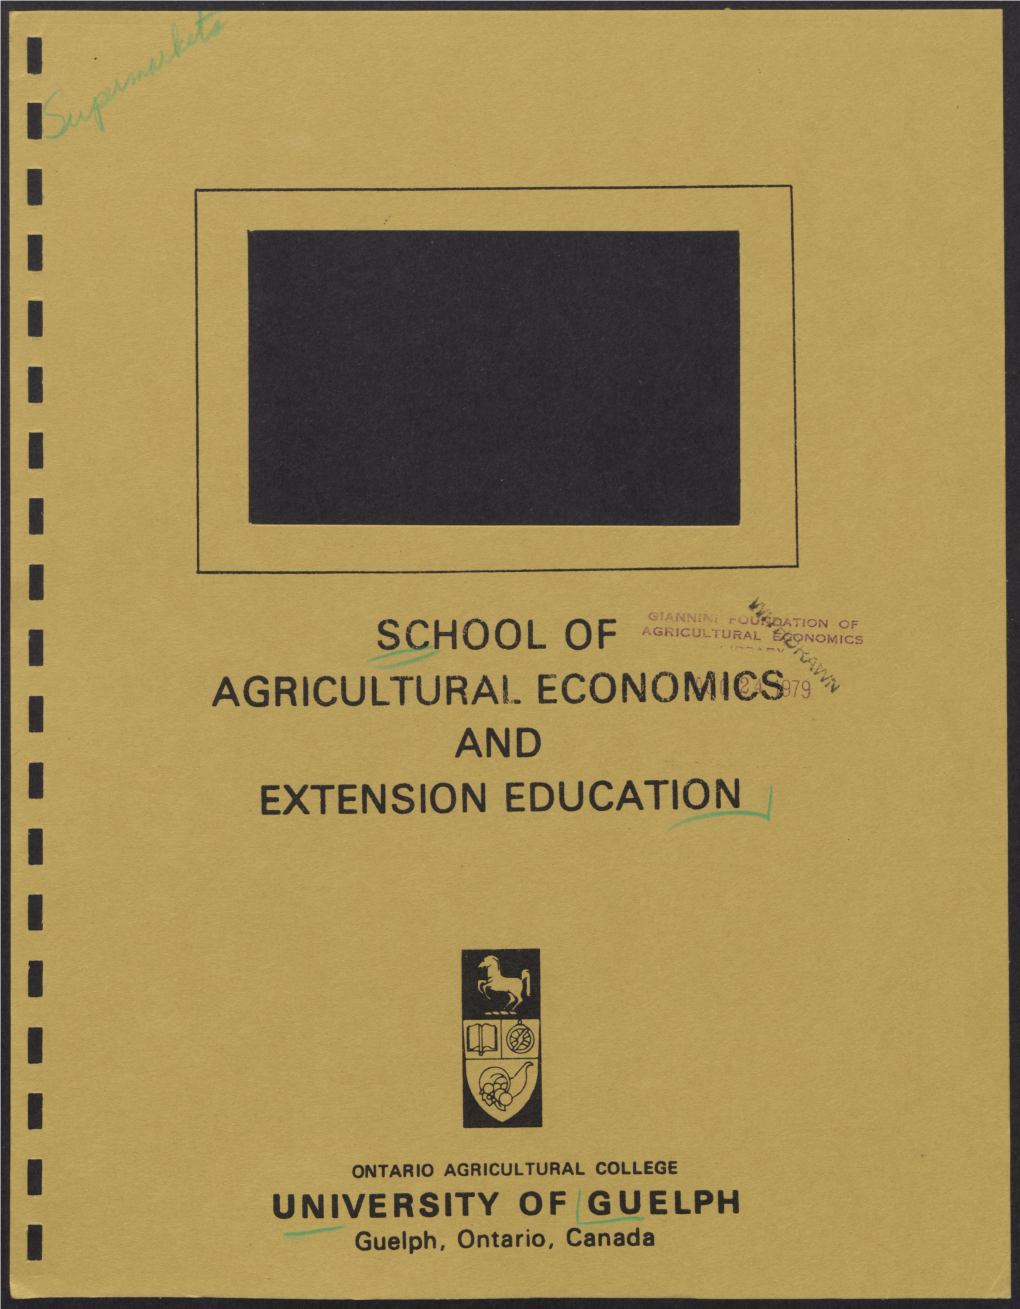 SCHOOL of I-Gkicult.Ur I-. *.7Mics AGRICULTURAL ECONOMICS:A and EXTENSION EDUCATION